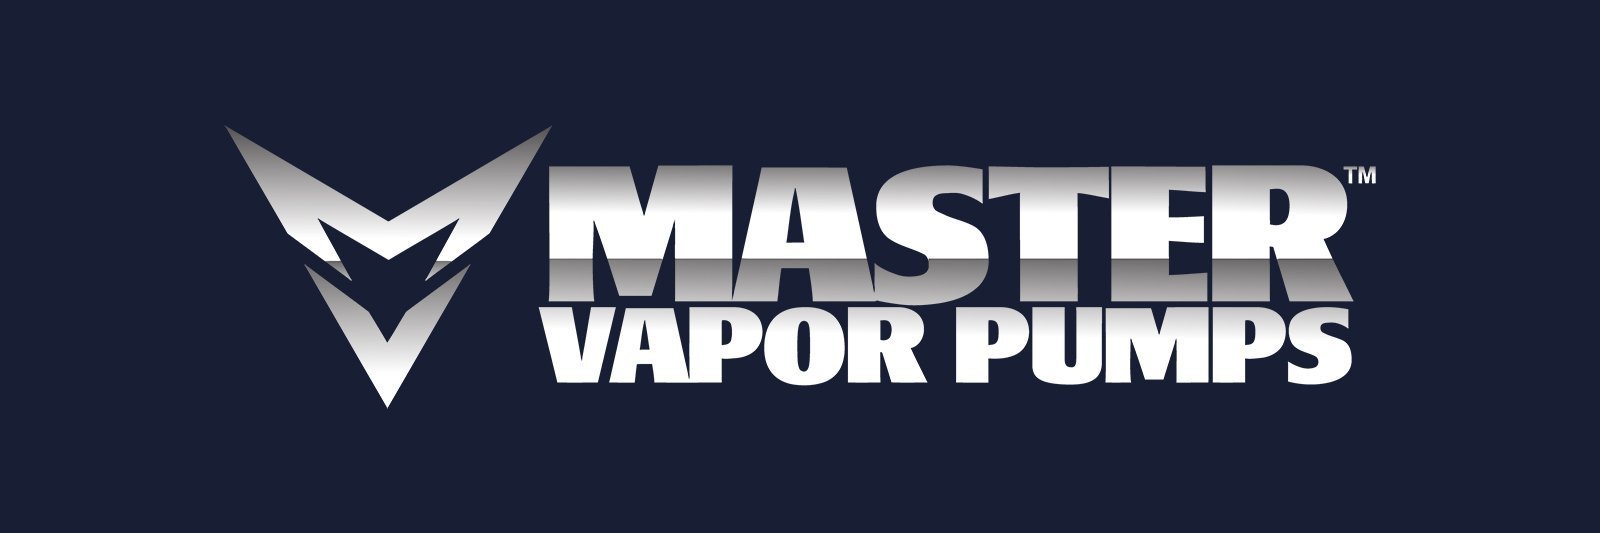 Master Vapor Pumps, Pump Part - MVP - 60 PSI, 150 PSI, Liquid, XL150 - PTFE CO2 Regulator Gasket